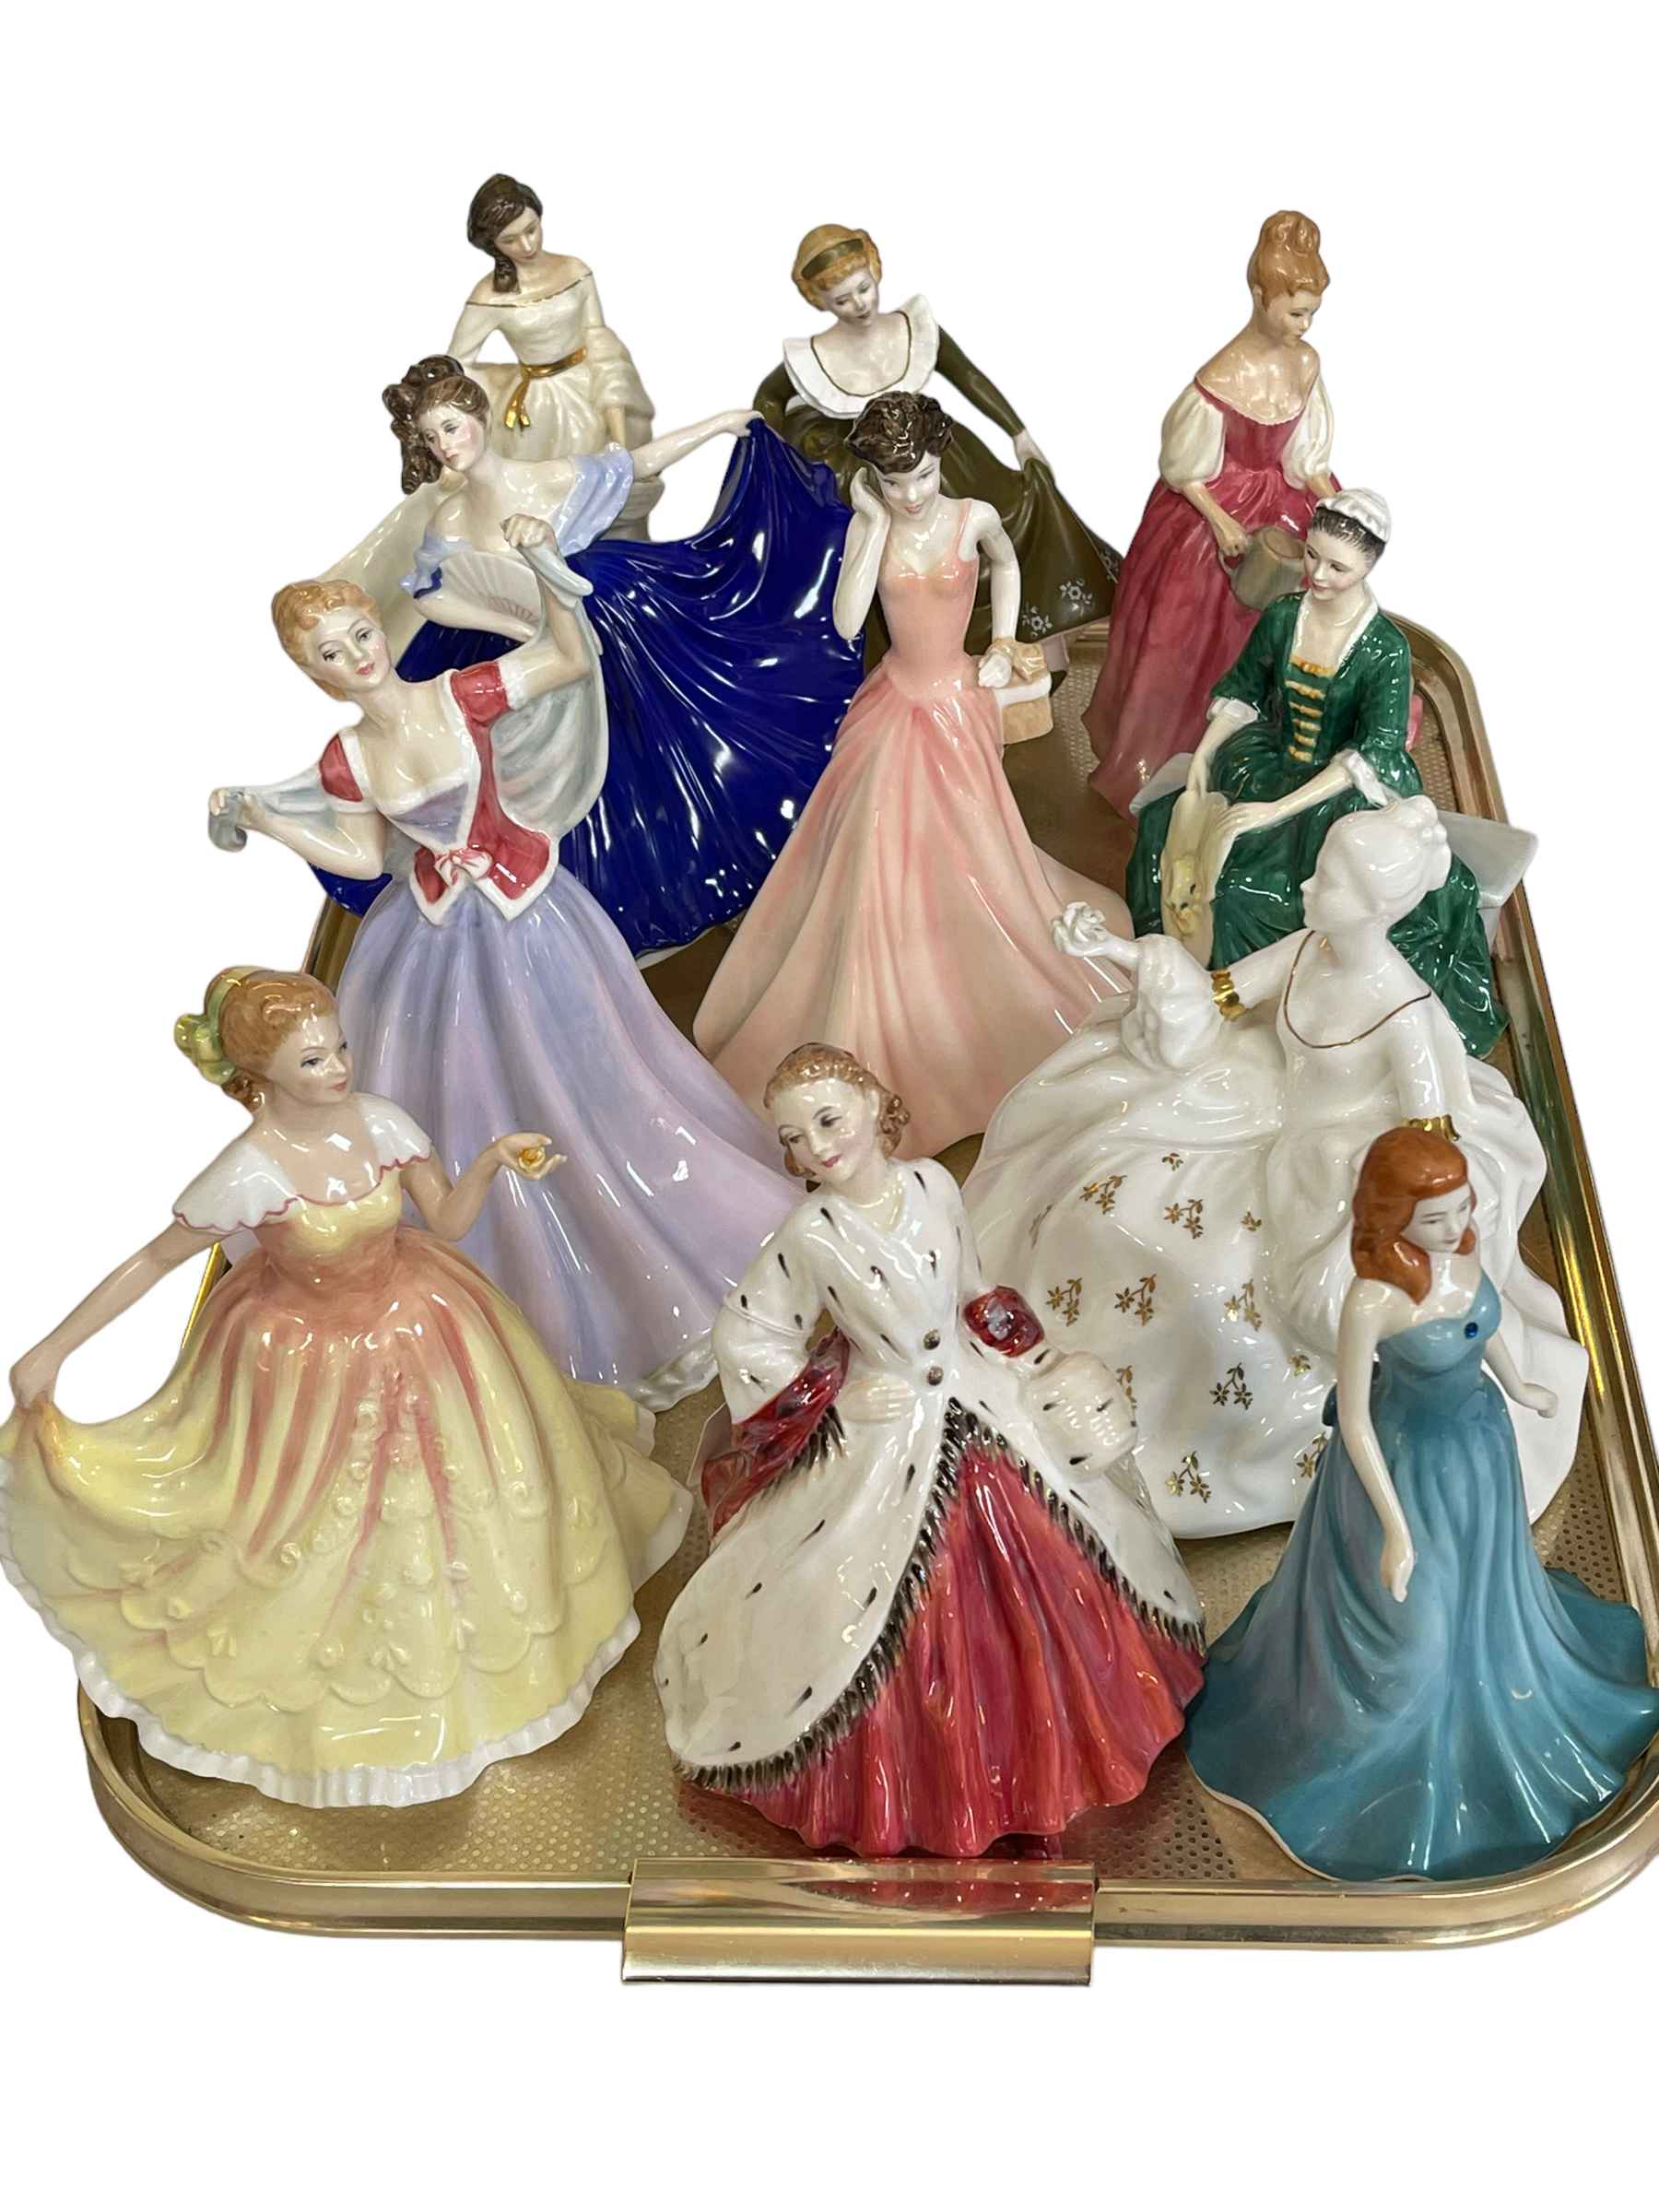 Eleven Royal Doulton ladies including June, Antoinette, The Ermine Coat, Alexandra, etc.